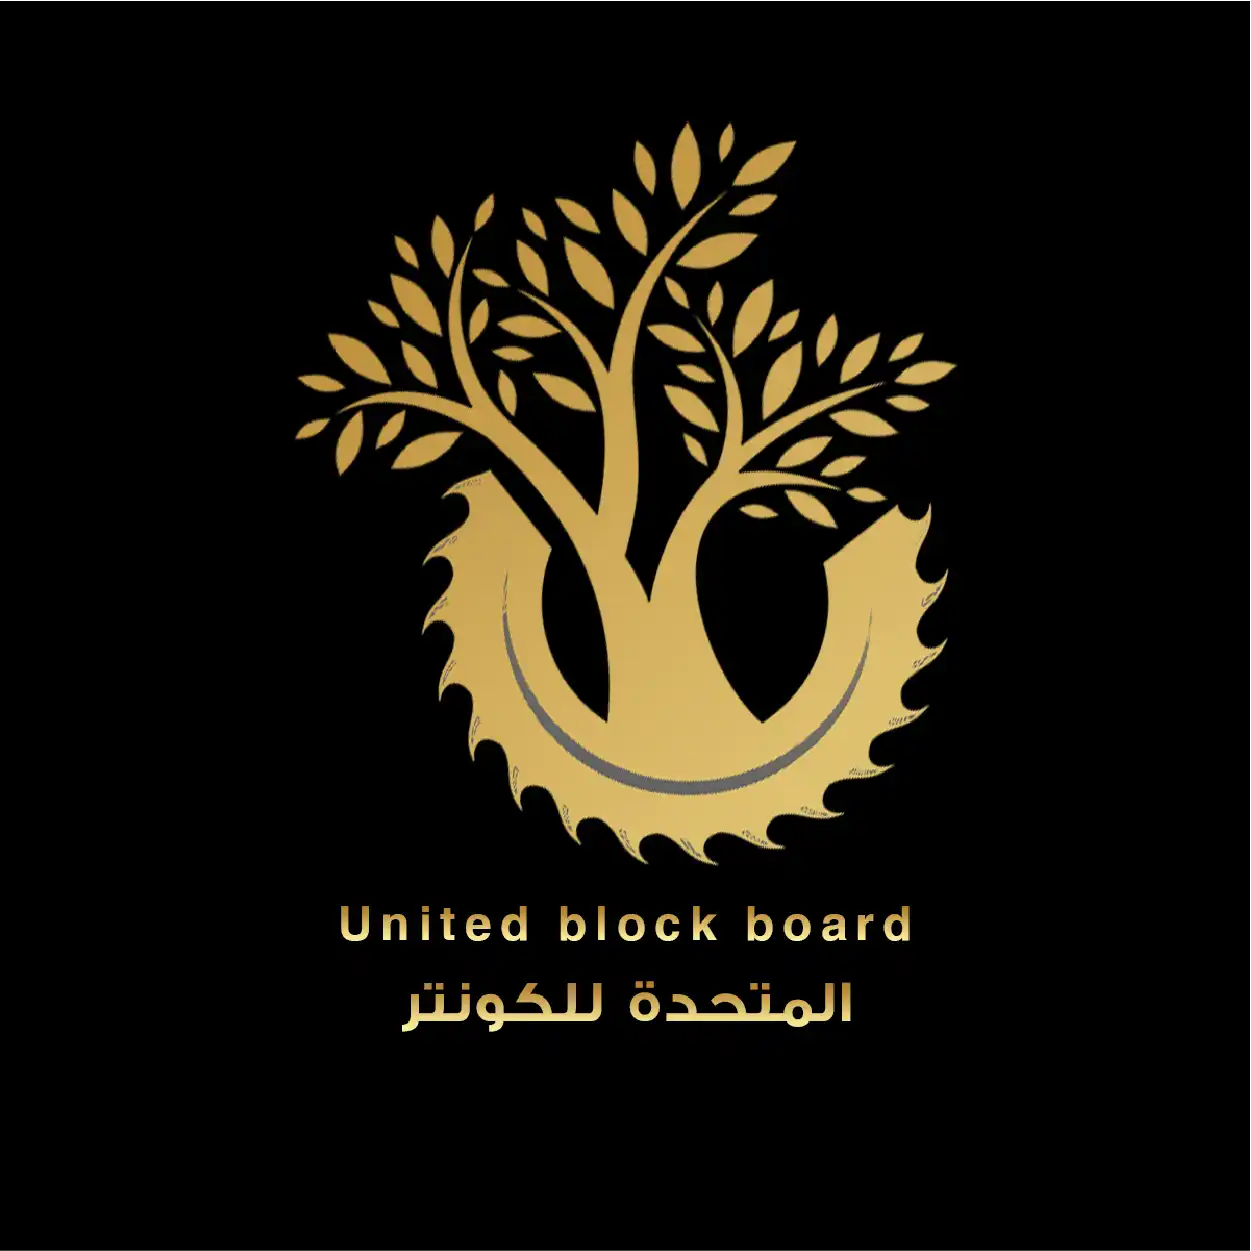 30 - Booth 256 United Block Board